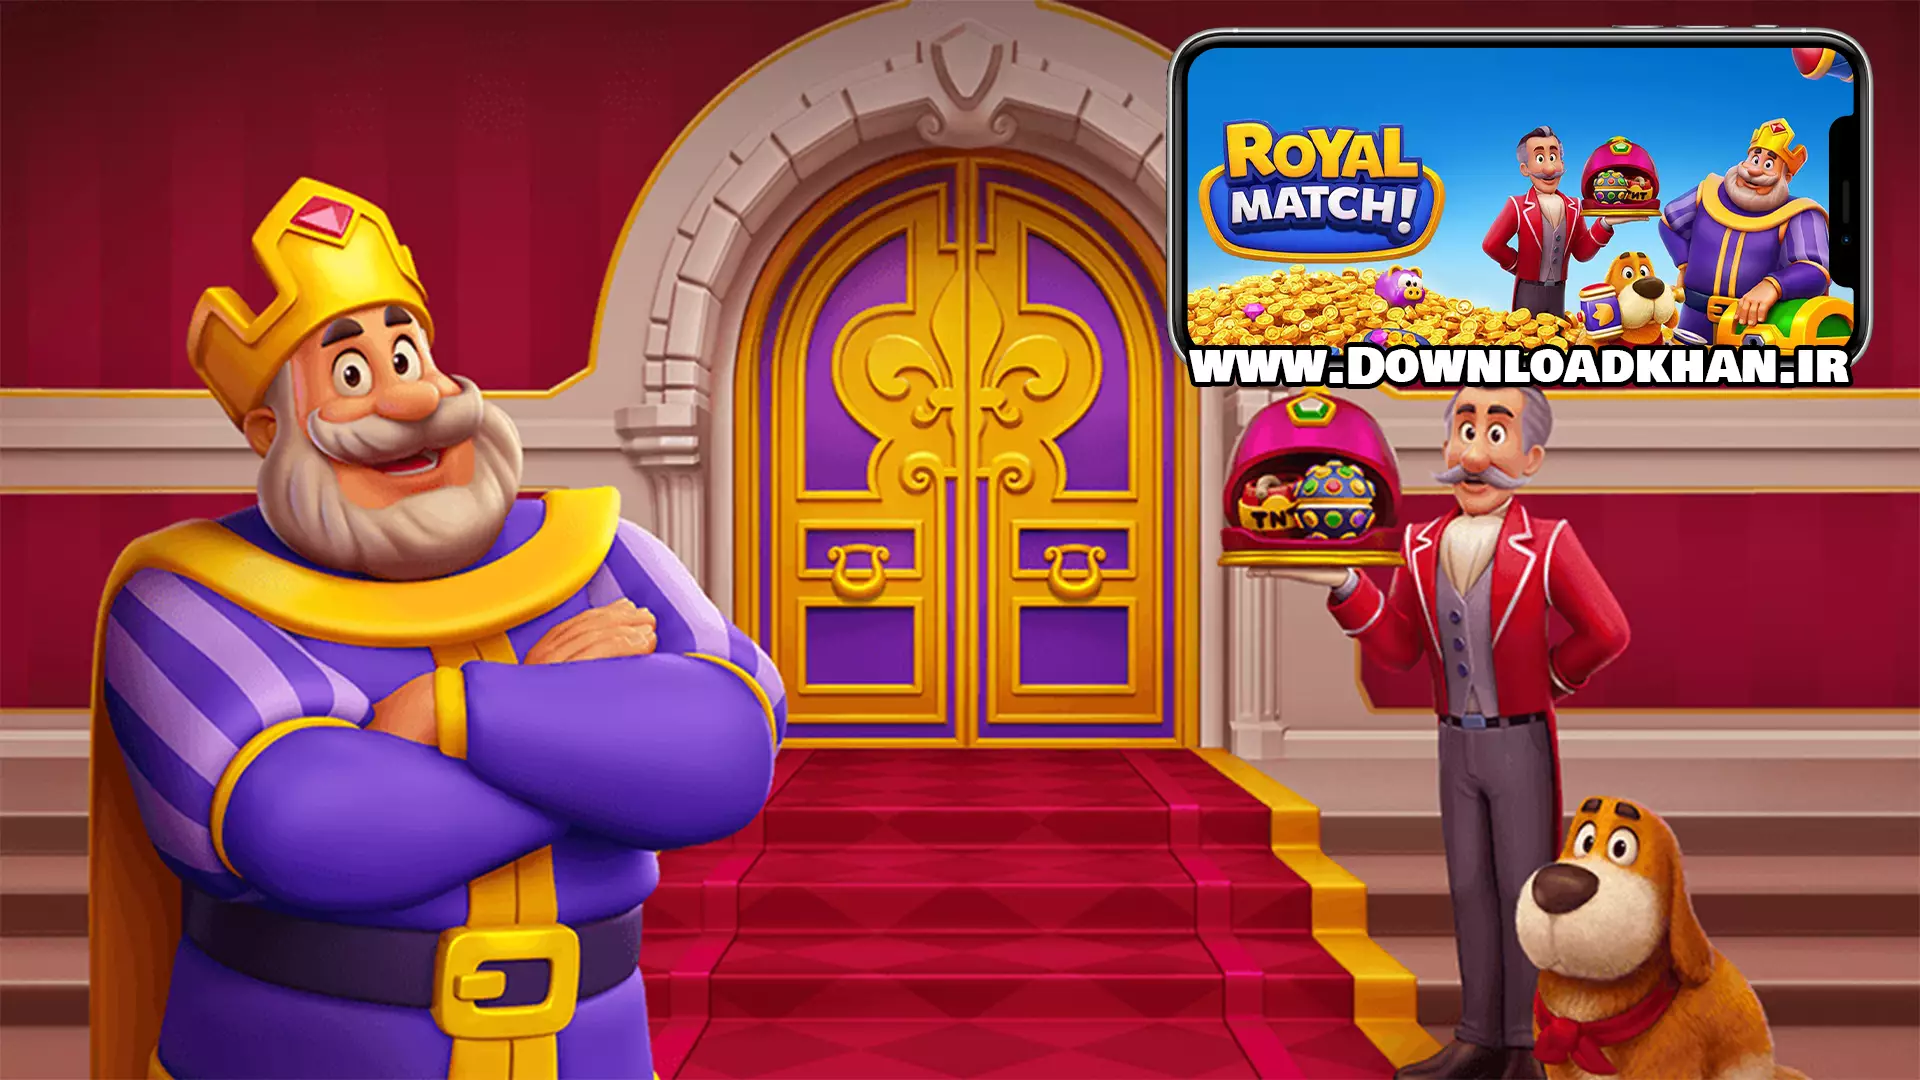 royal match